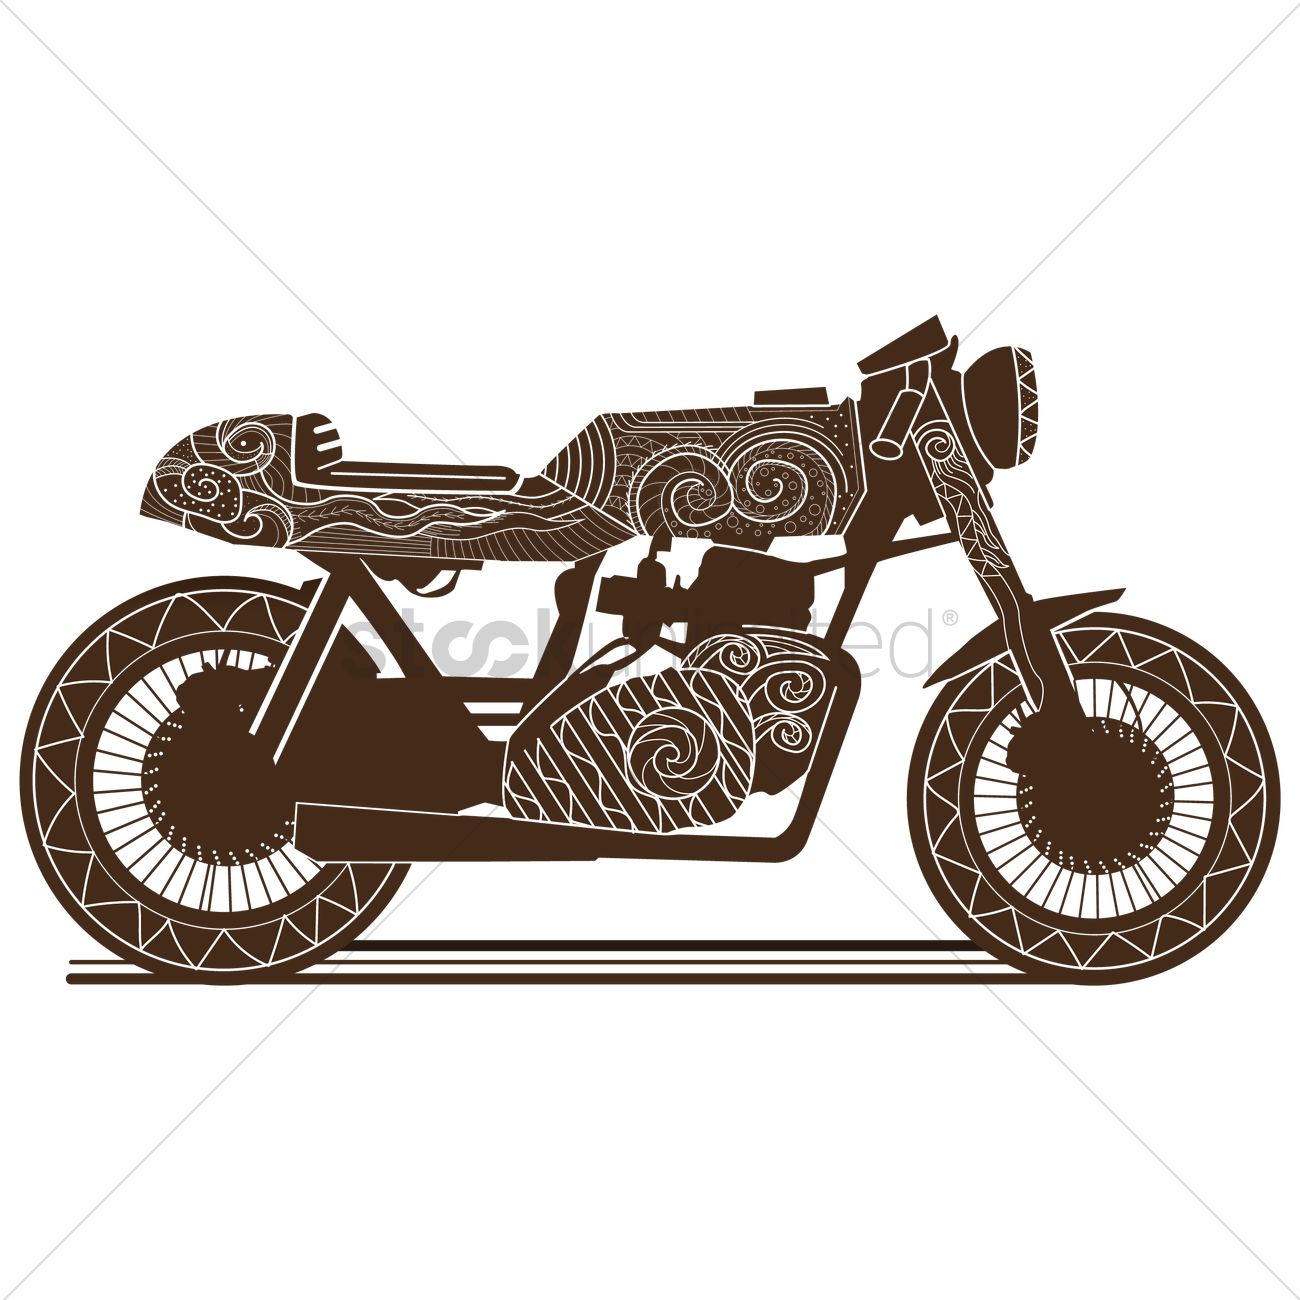 Stylized motorbike design.